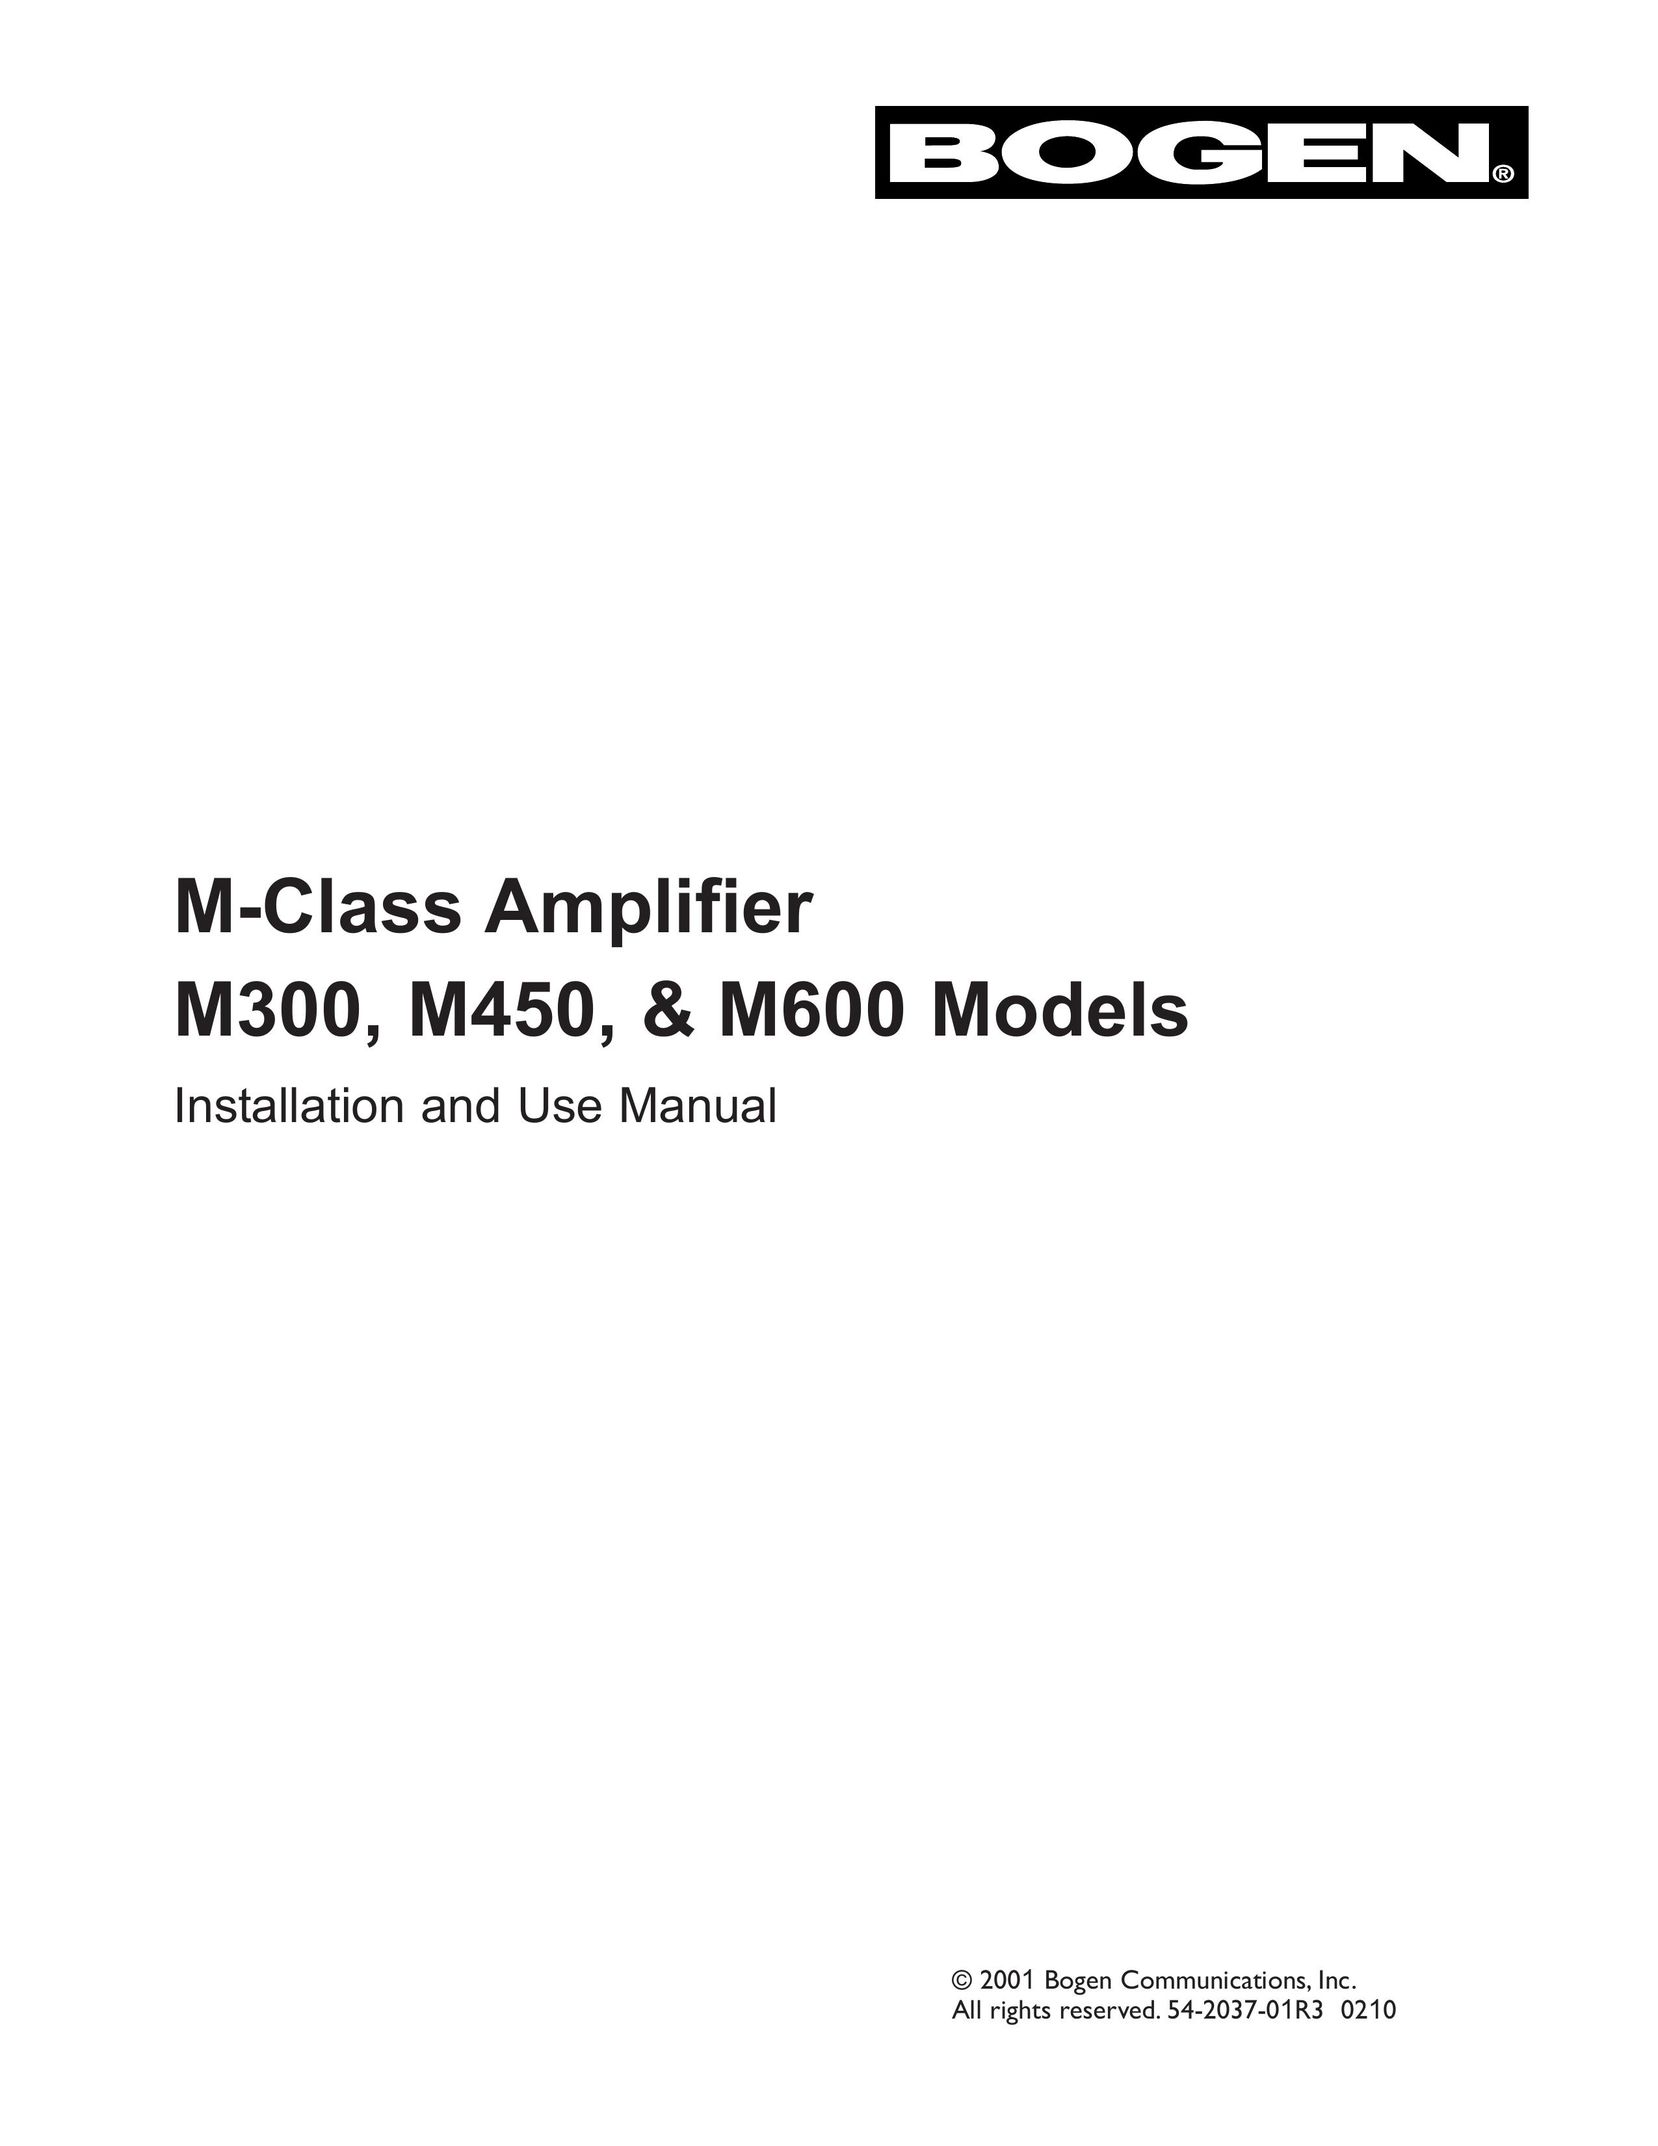 Bogen M600 Stereo Amplifier User Manual